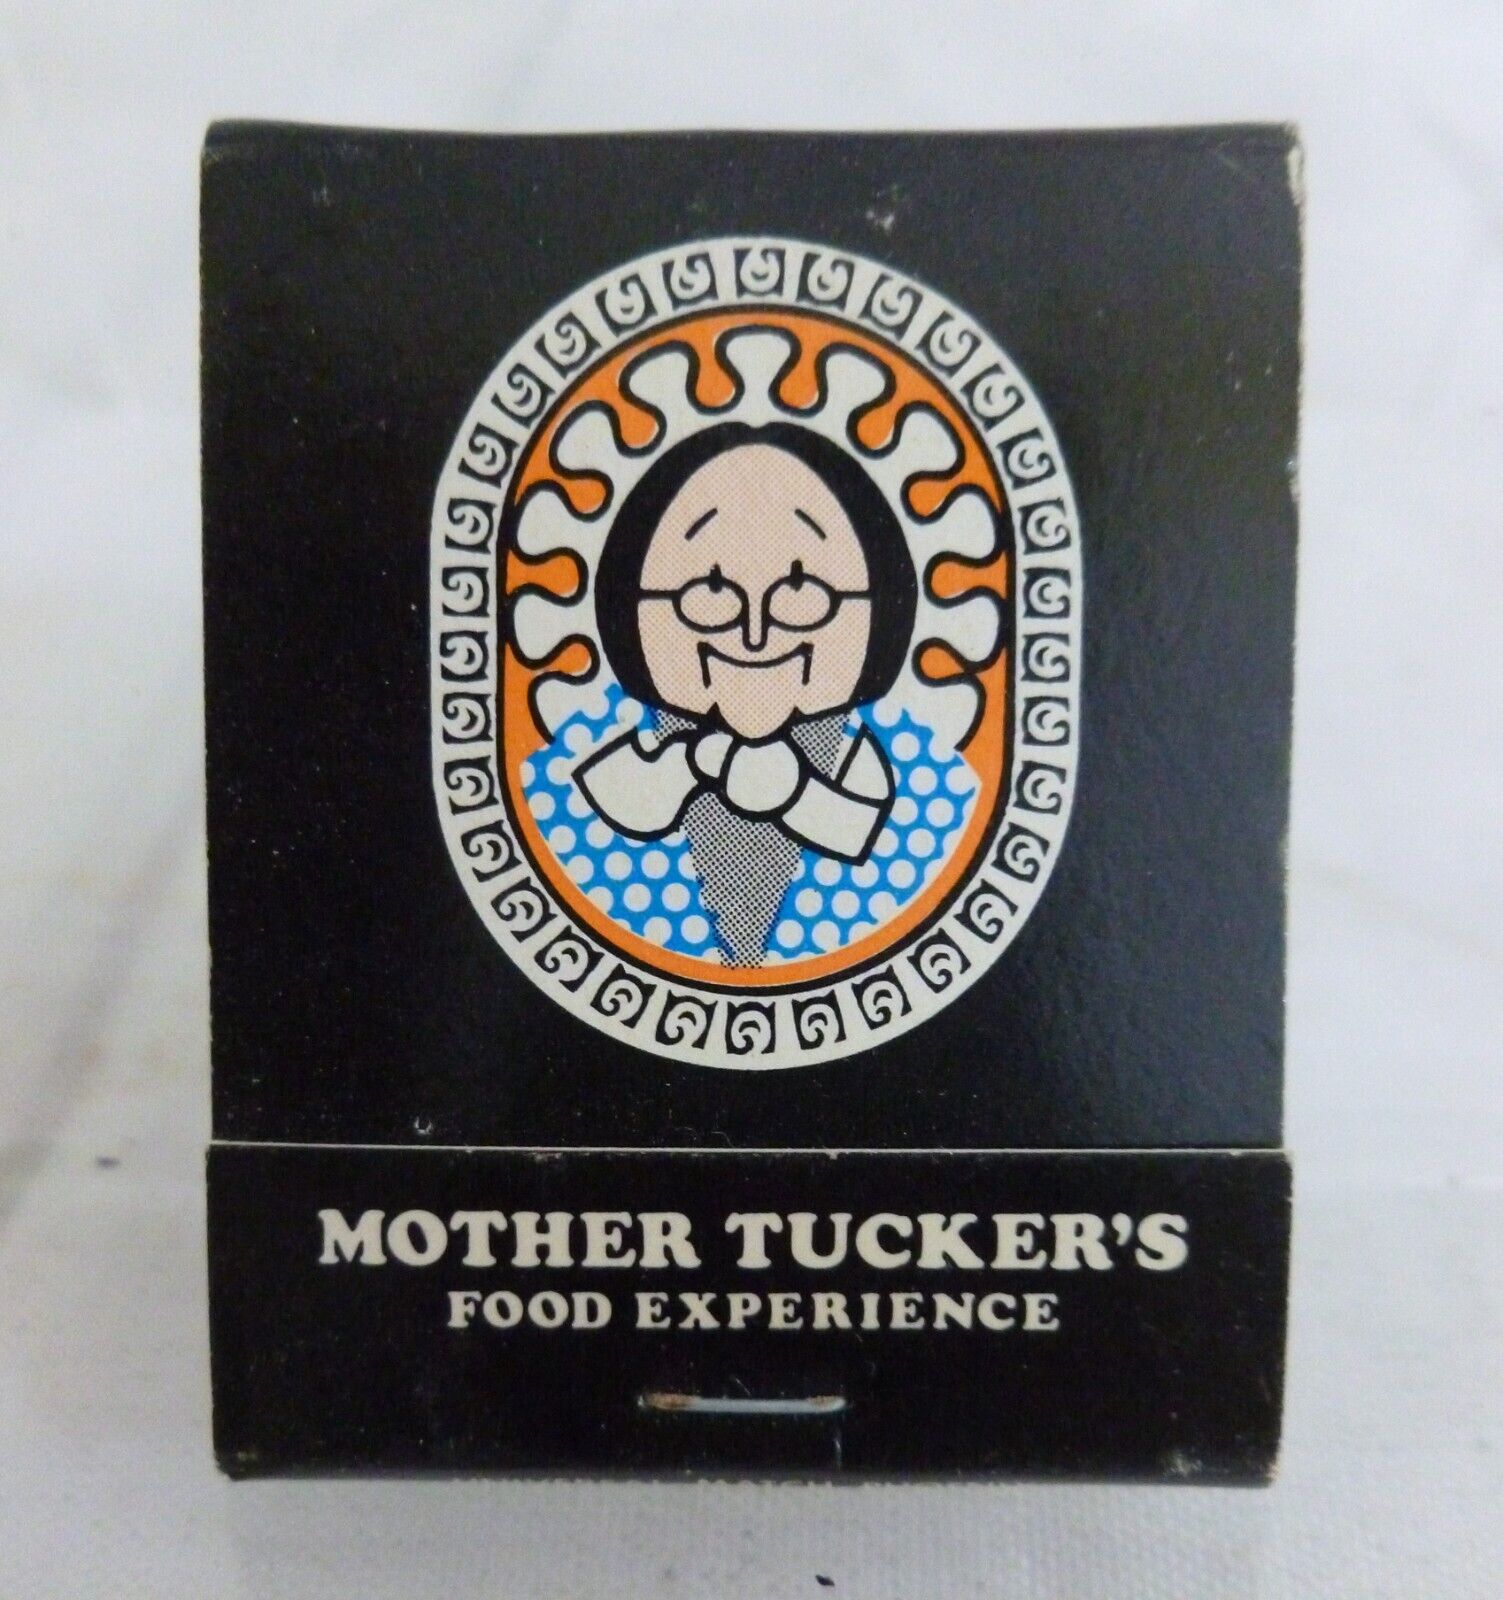 Vintage Matchbook Unstruck - Mother Tuckers General Store - Food Experience